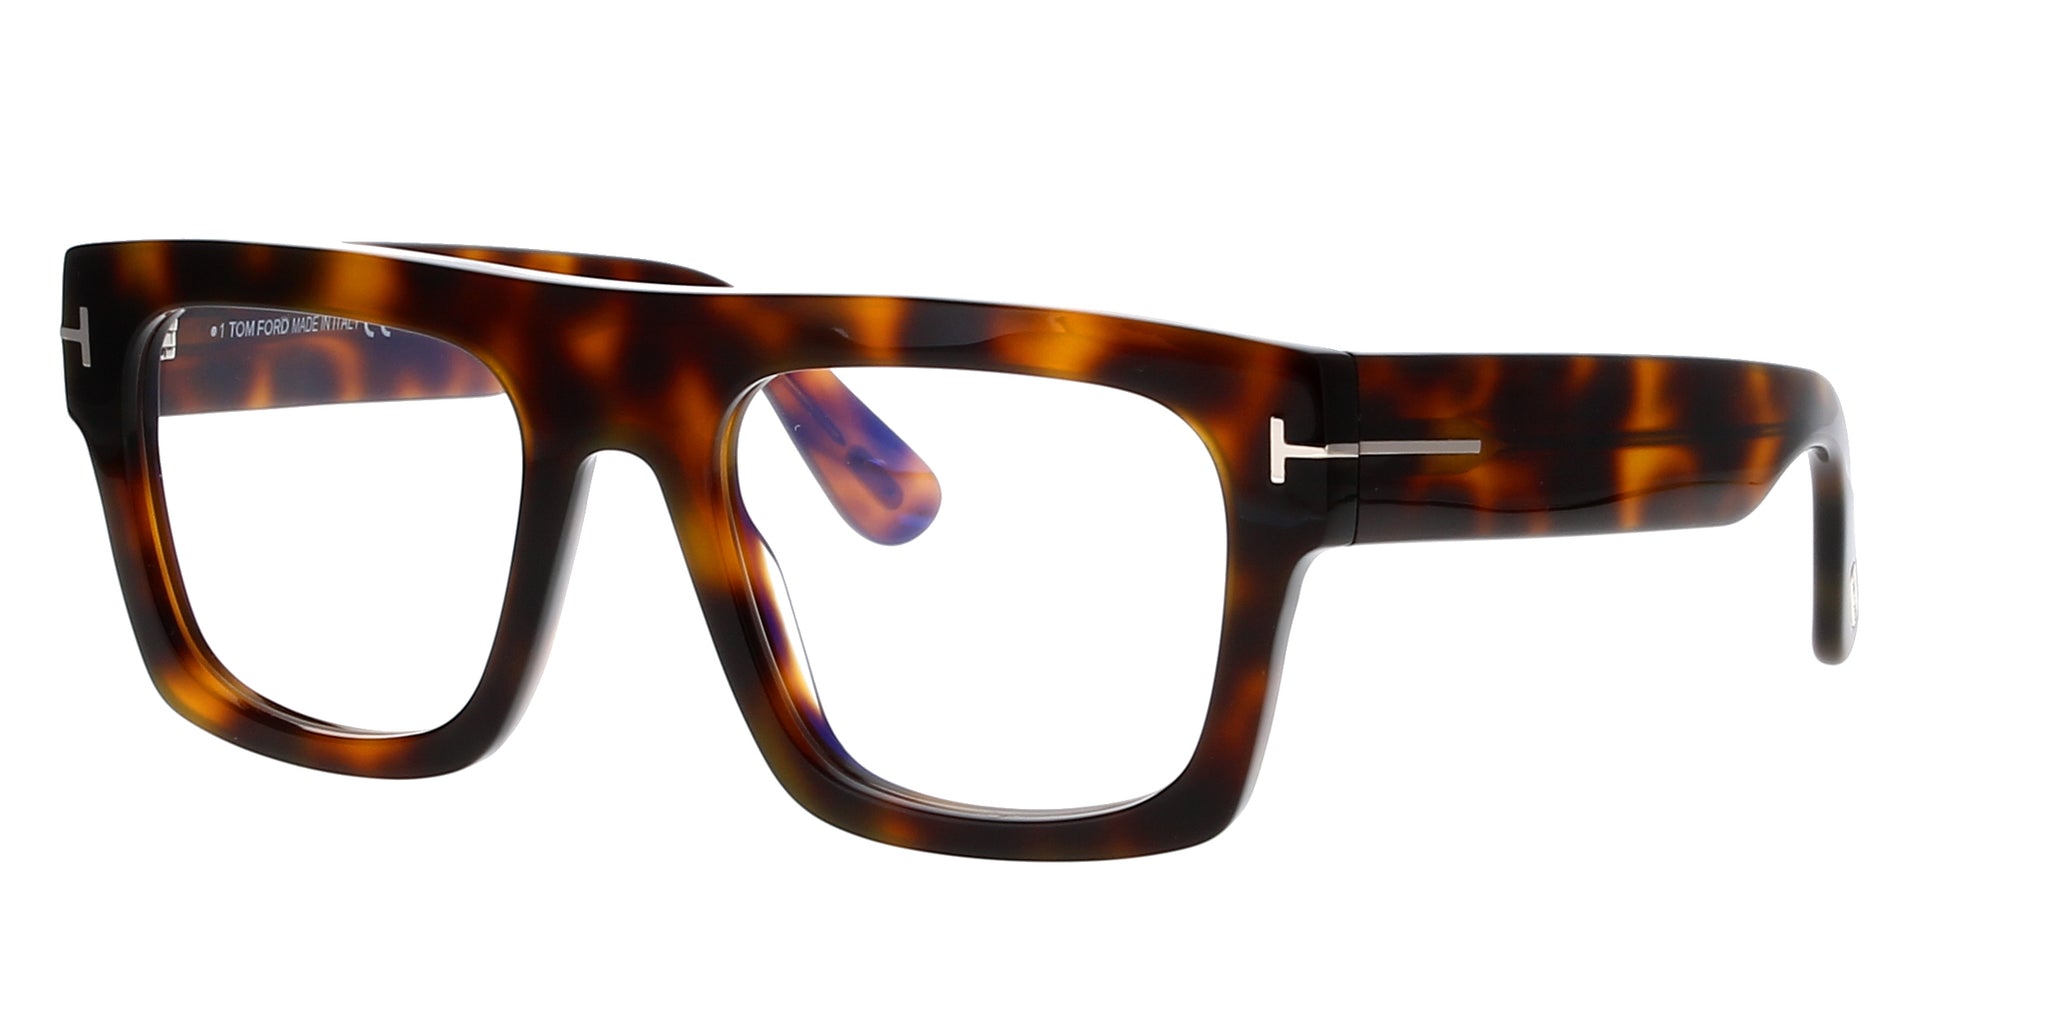 Tom Ford TF5634-B Square Acetate Glasses | Fashion Eyewear UK